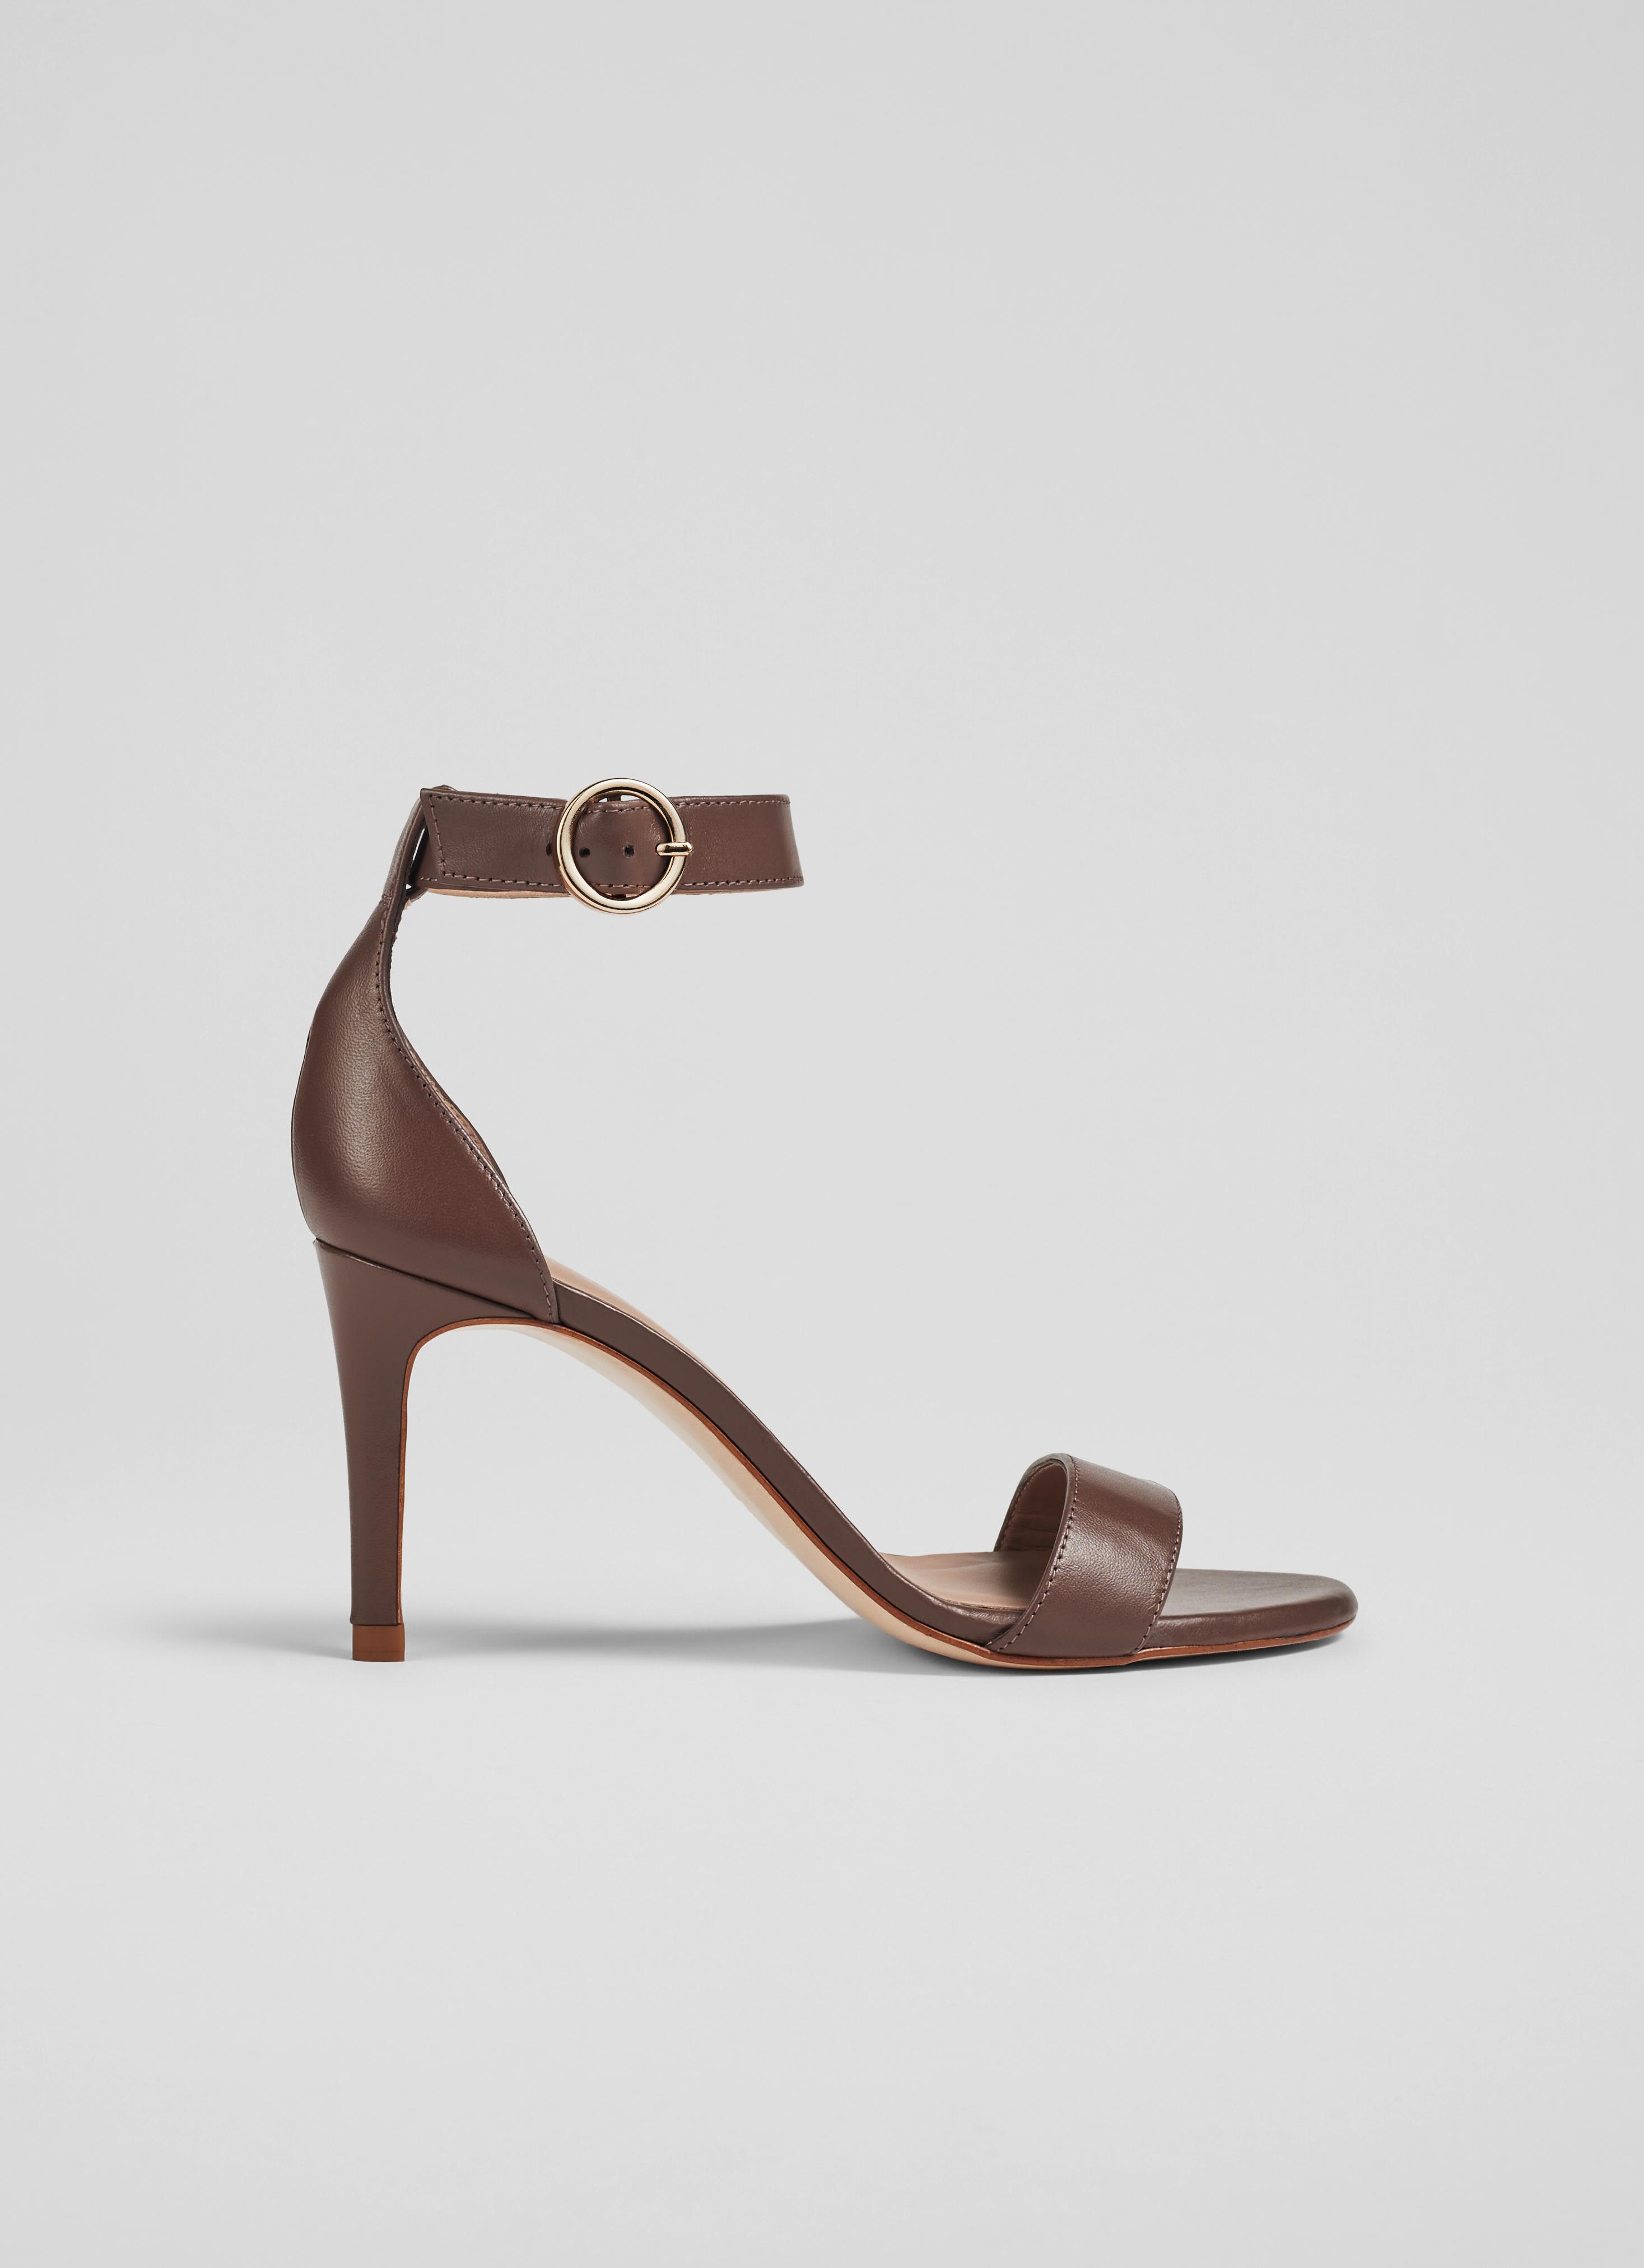 Cream Patent Strappy Stiletto Heel Sandals | New Look